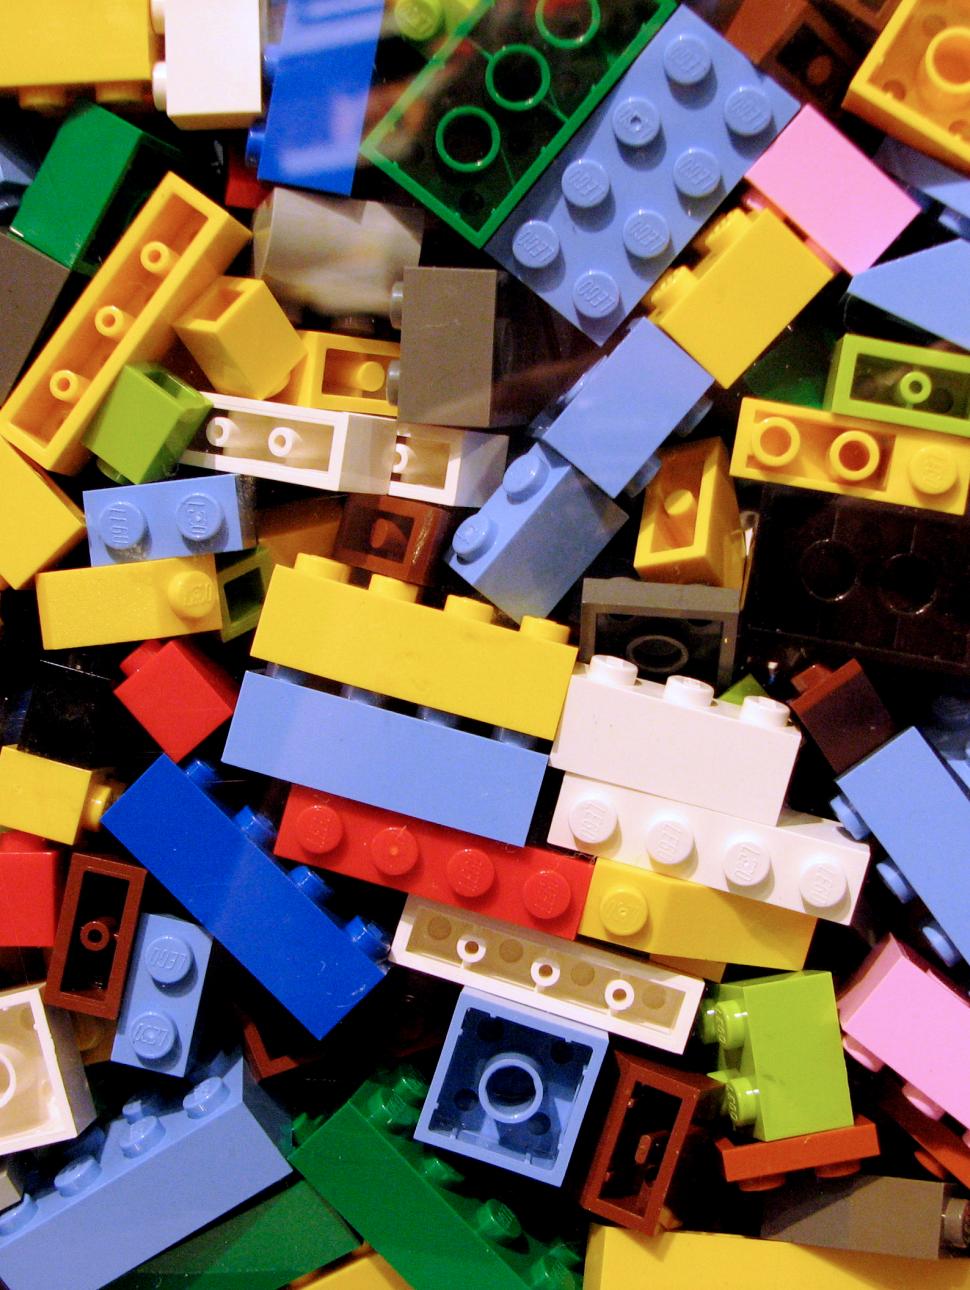 A pile of rainbow lego blocks